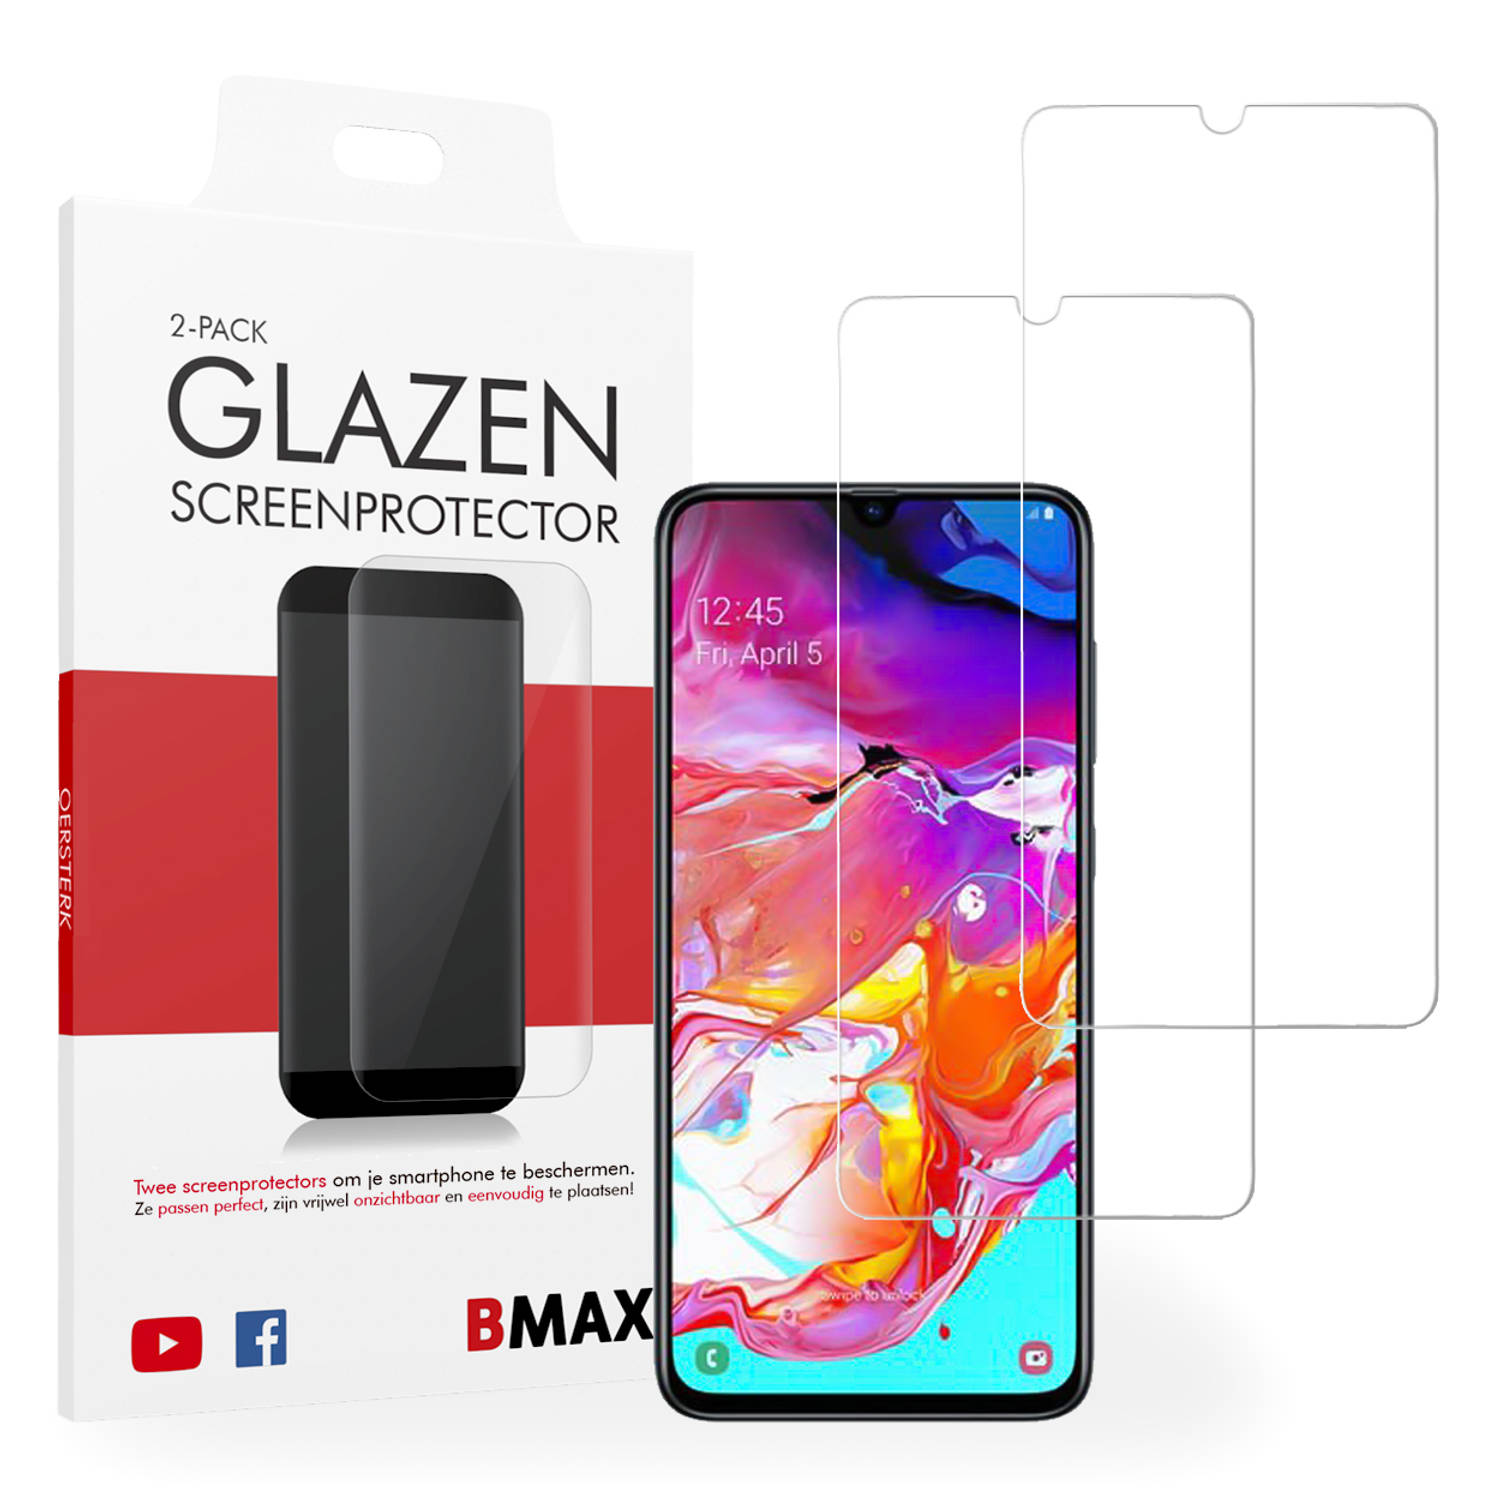 2-pack BMAX Samsung Galaxy A70 Screenprotector - Glass - 2.5D